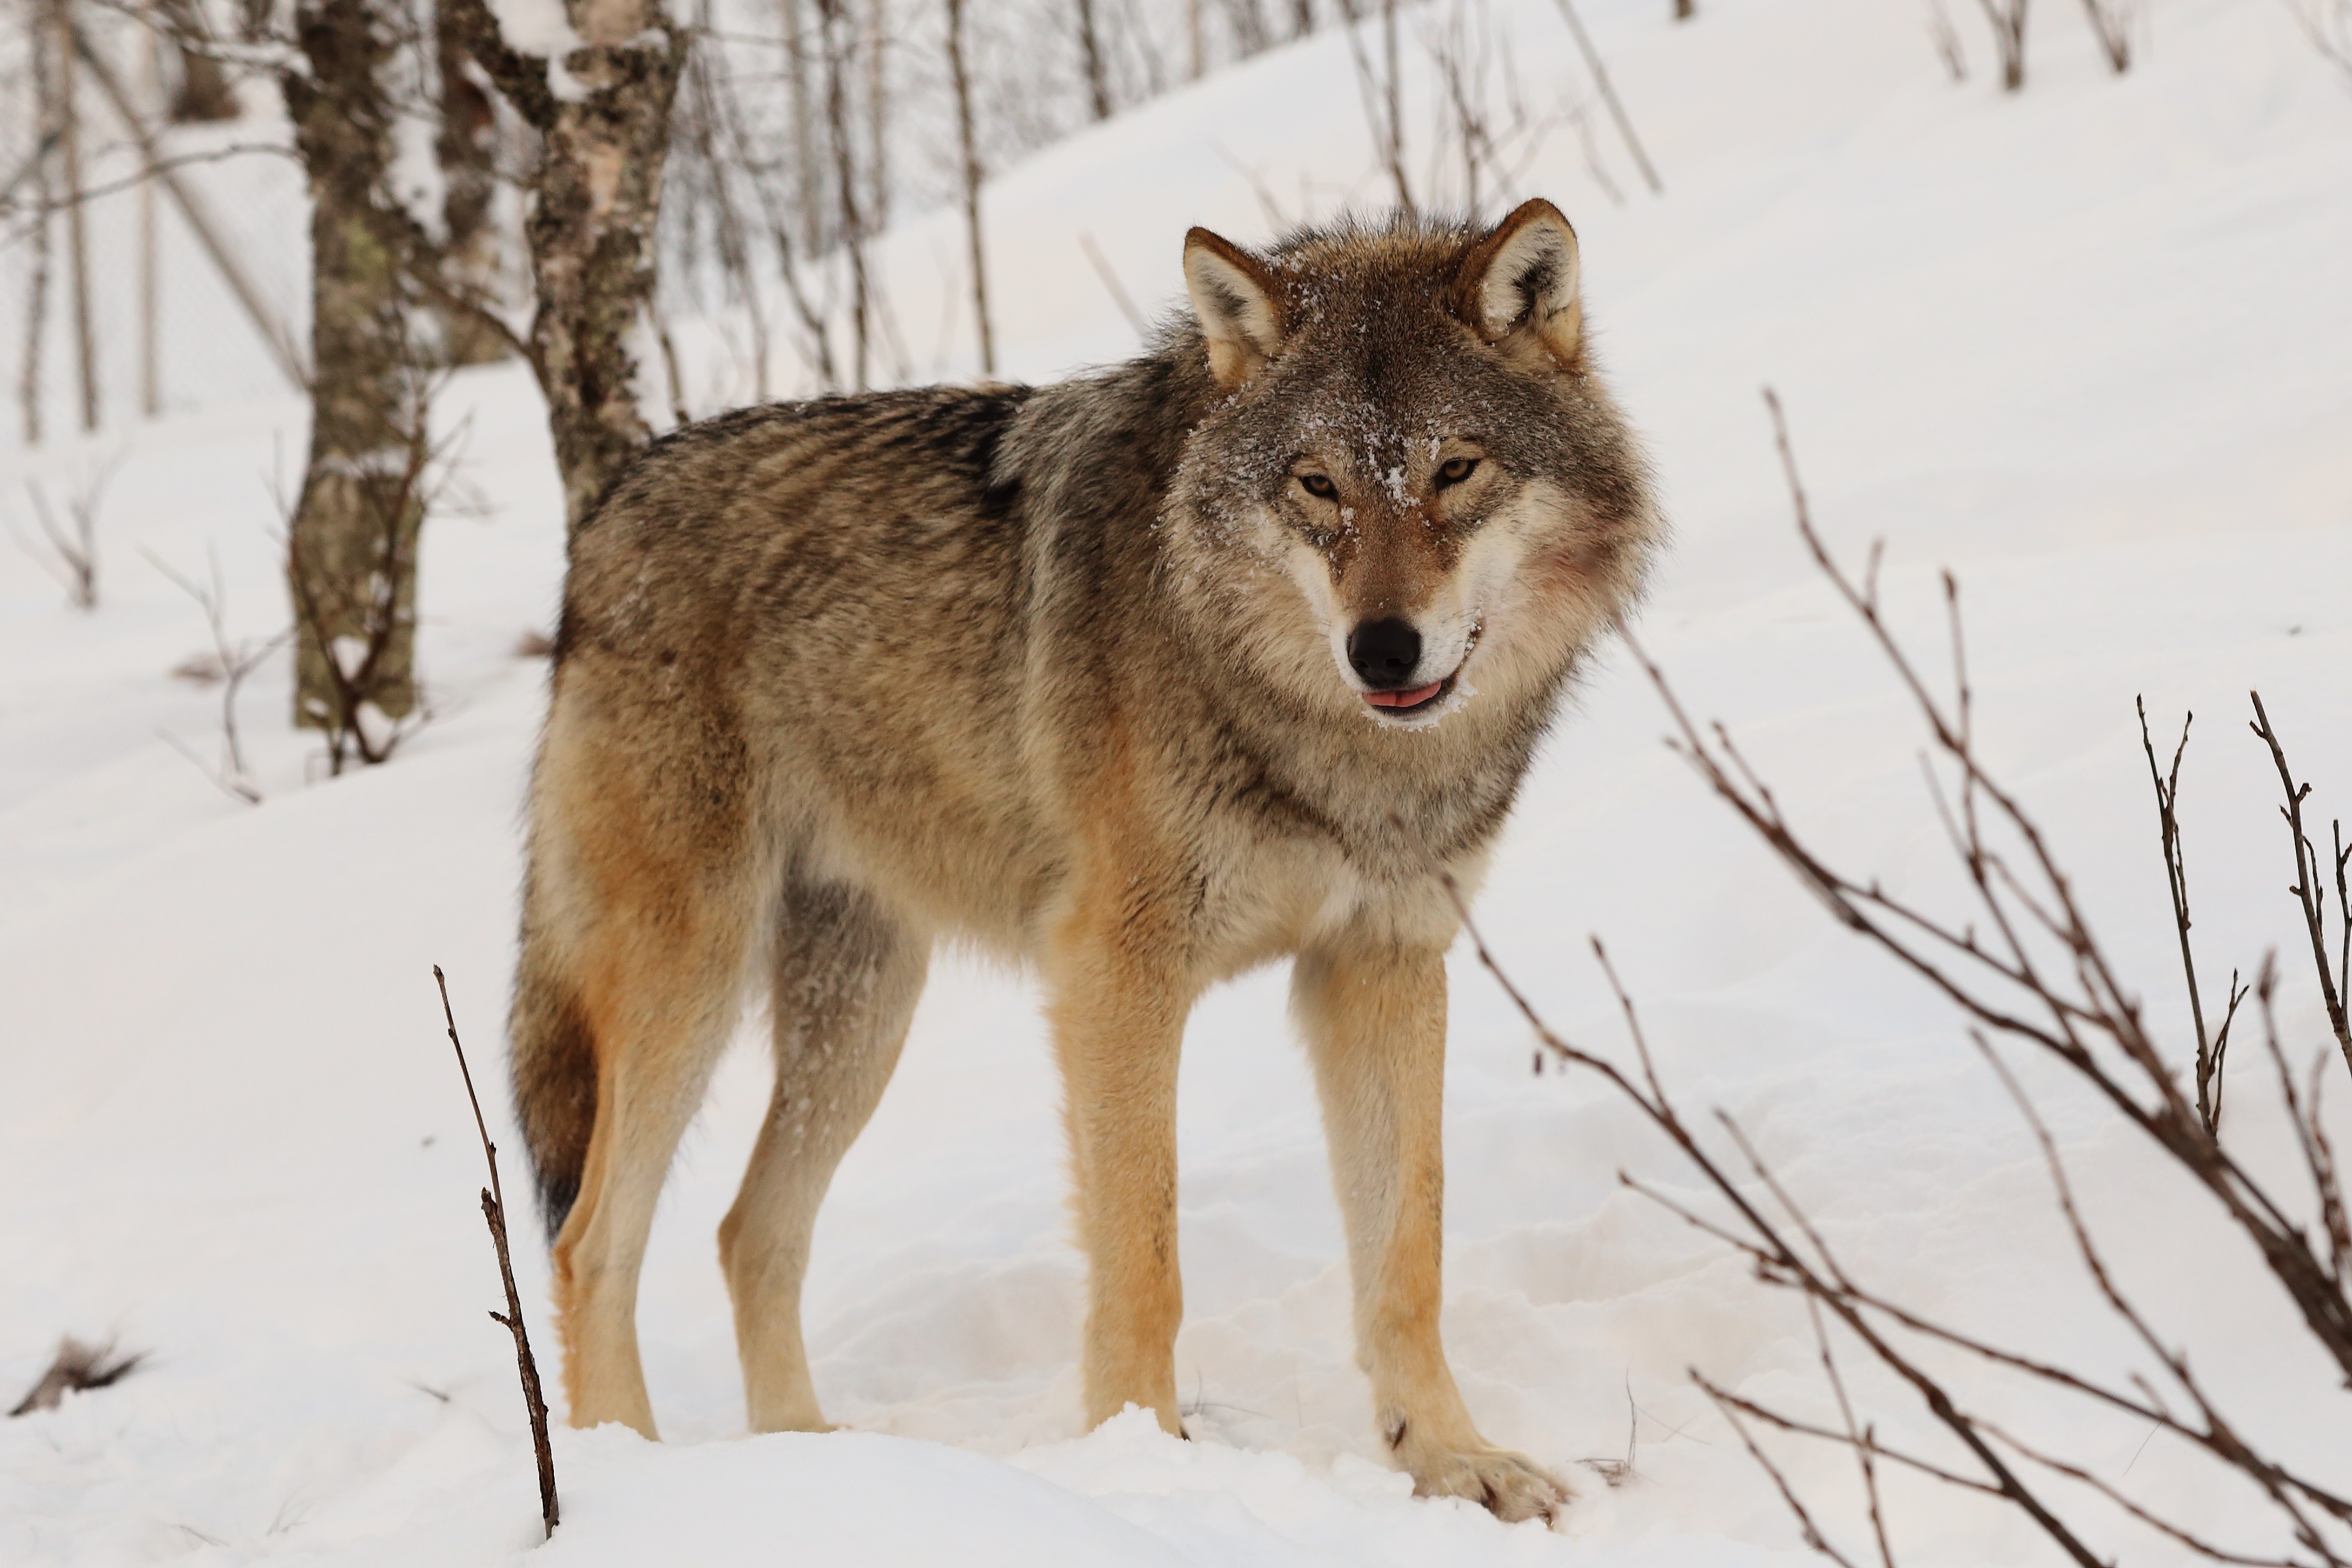 Eurasian wolf (Canis lupus lupus). Image credit: CC by SA 4.0, Mas3cf